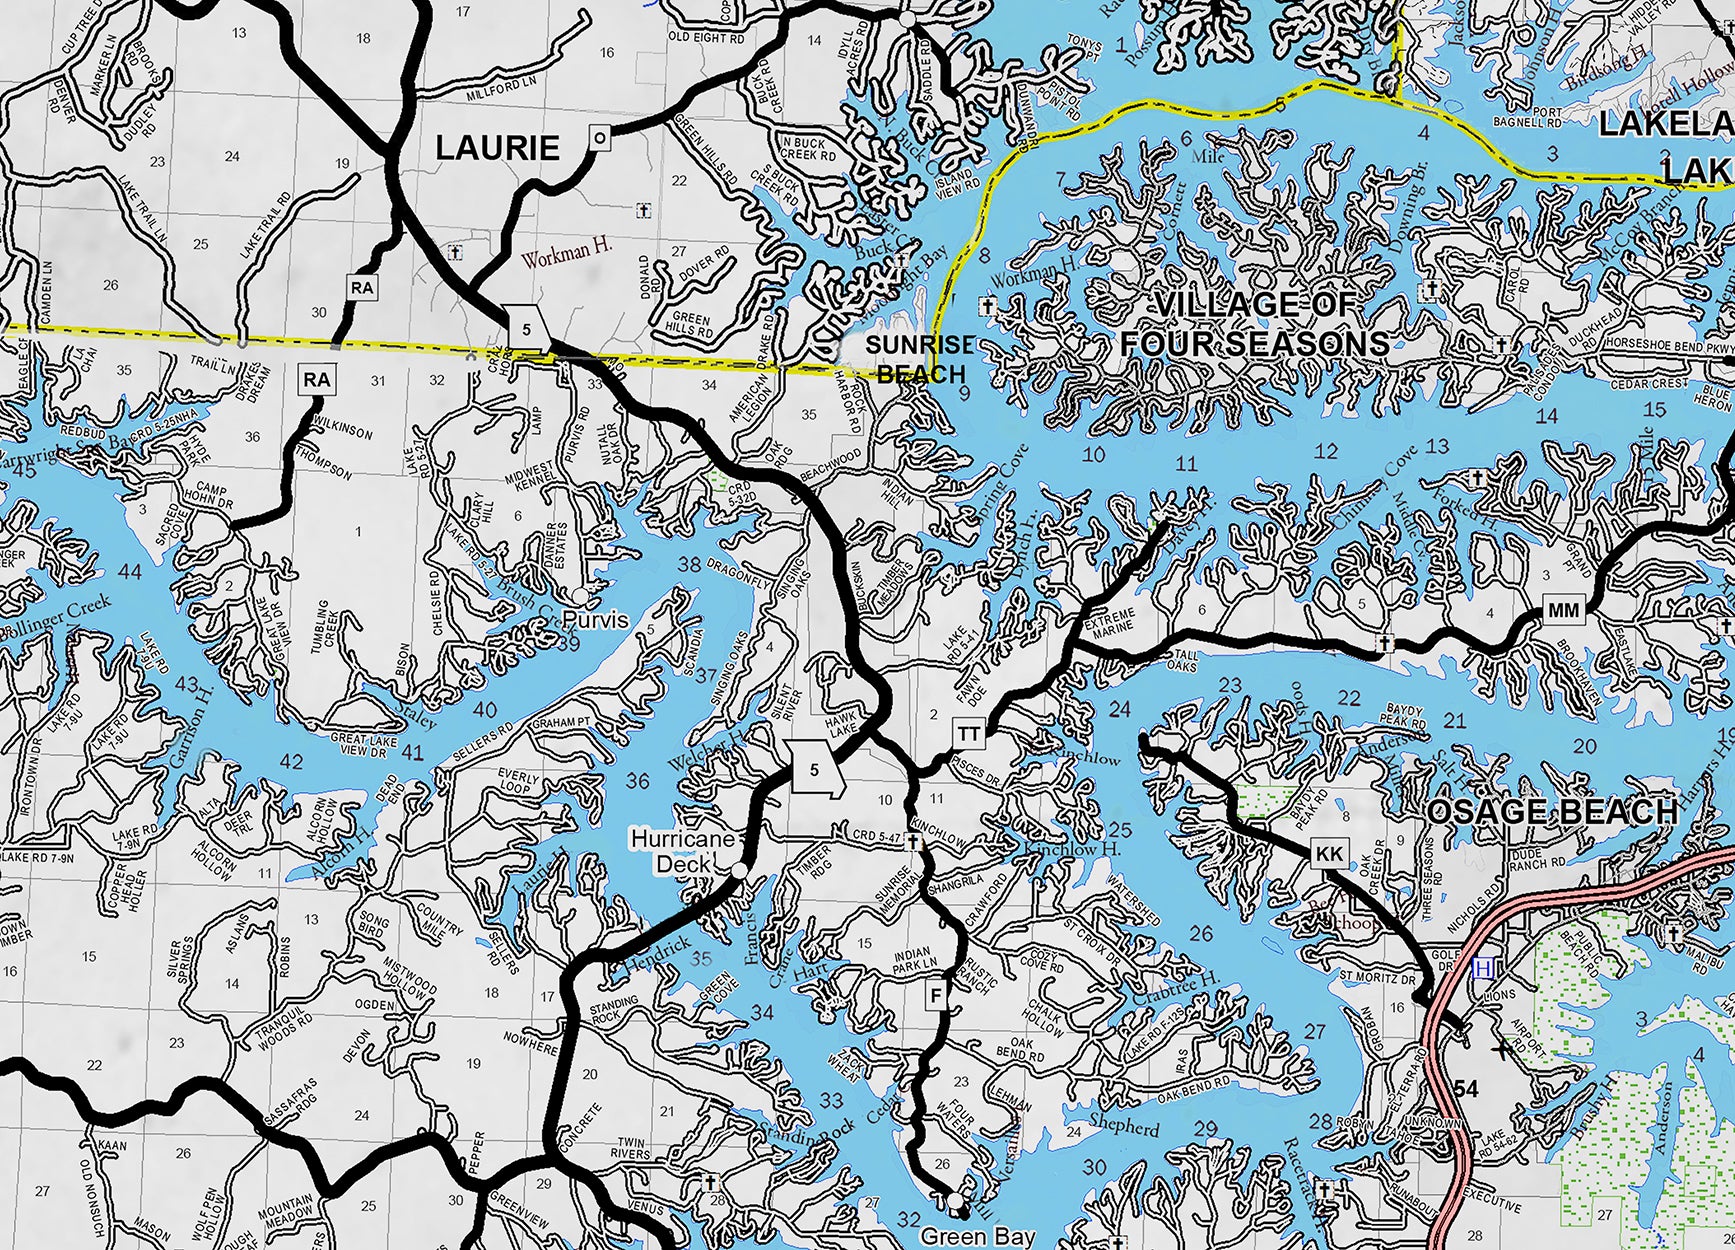 Lake ozarks map mile markers